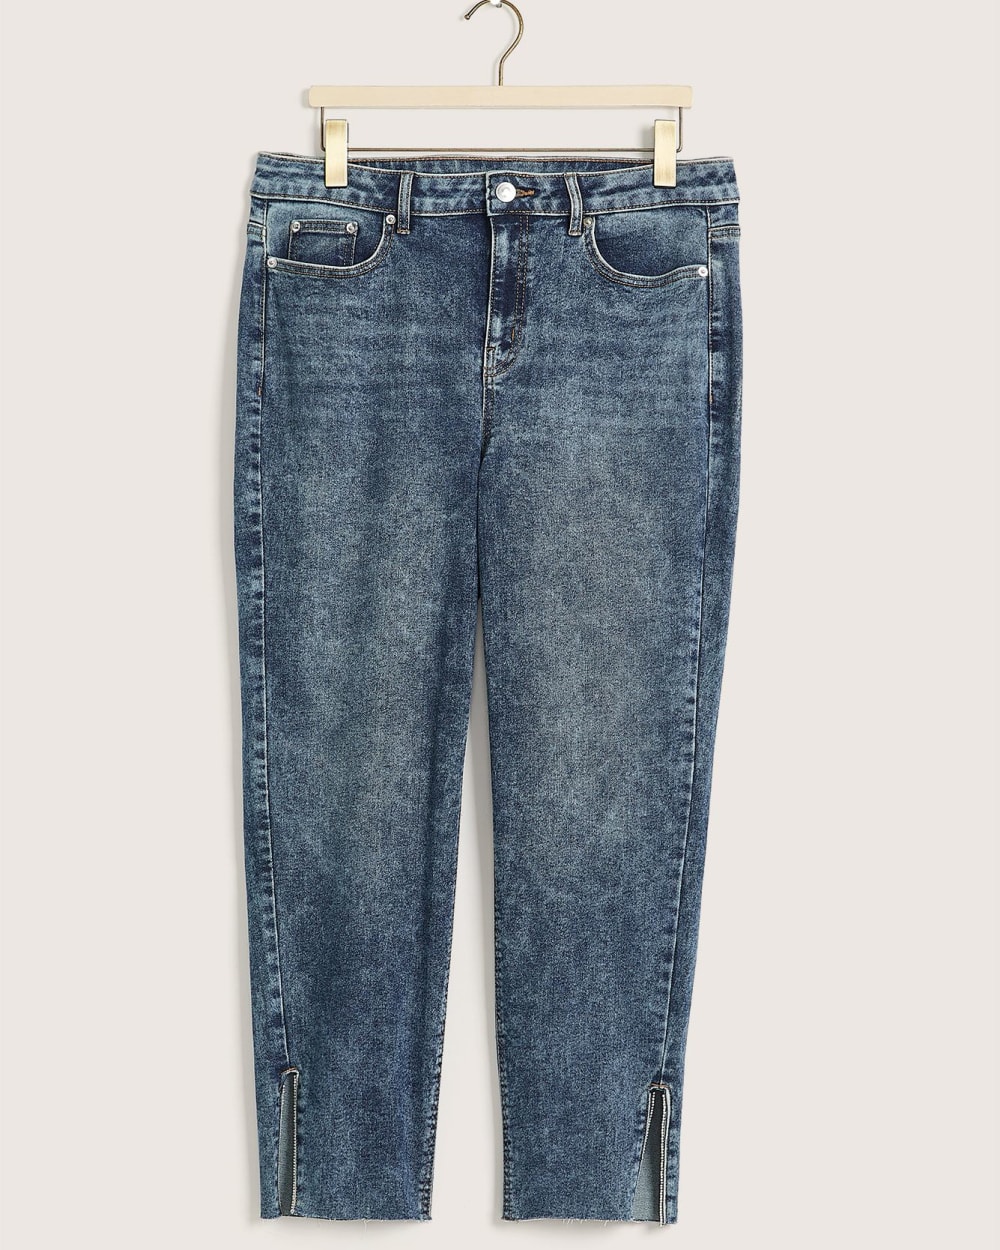 Responsible, Slim-Leg Jeans with Rhinestones Slit - Addition Elle